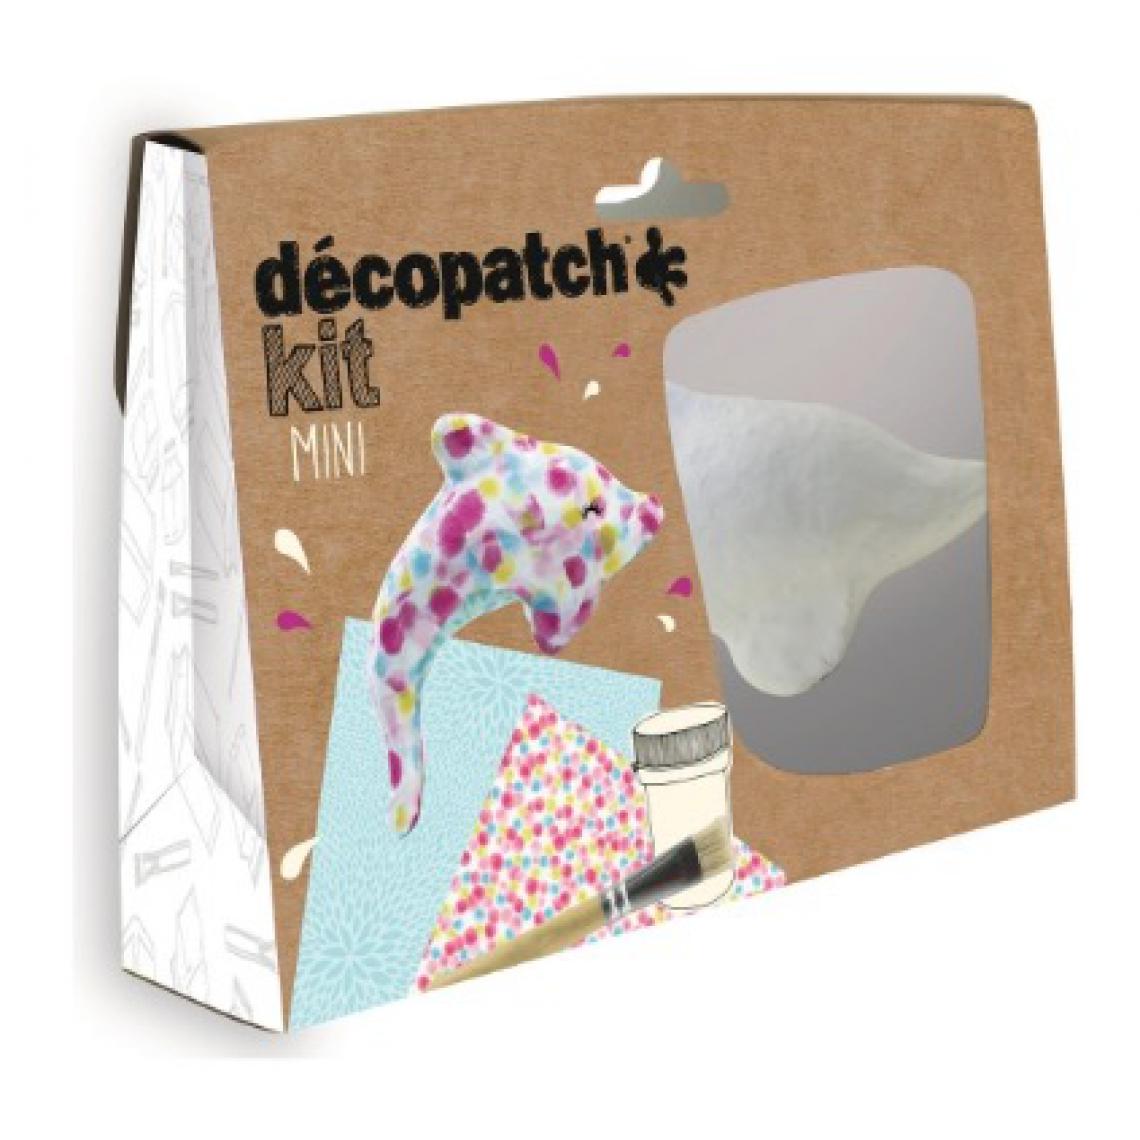 Avenue Mandarine - Decopatch Mini kit Dauphin - Dessin et peinture